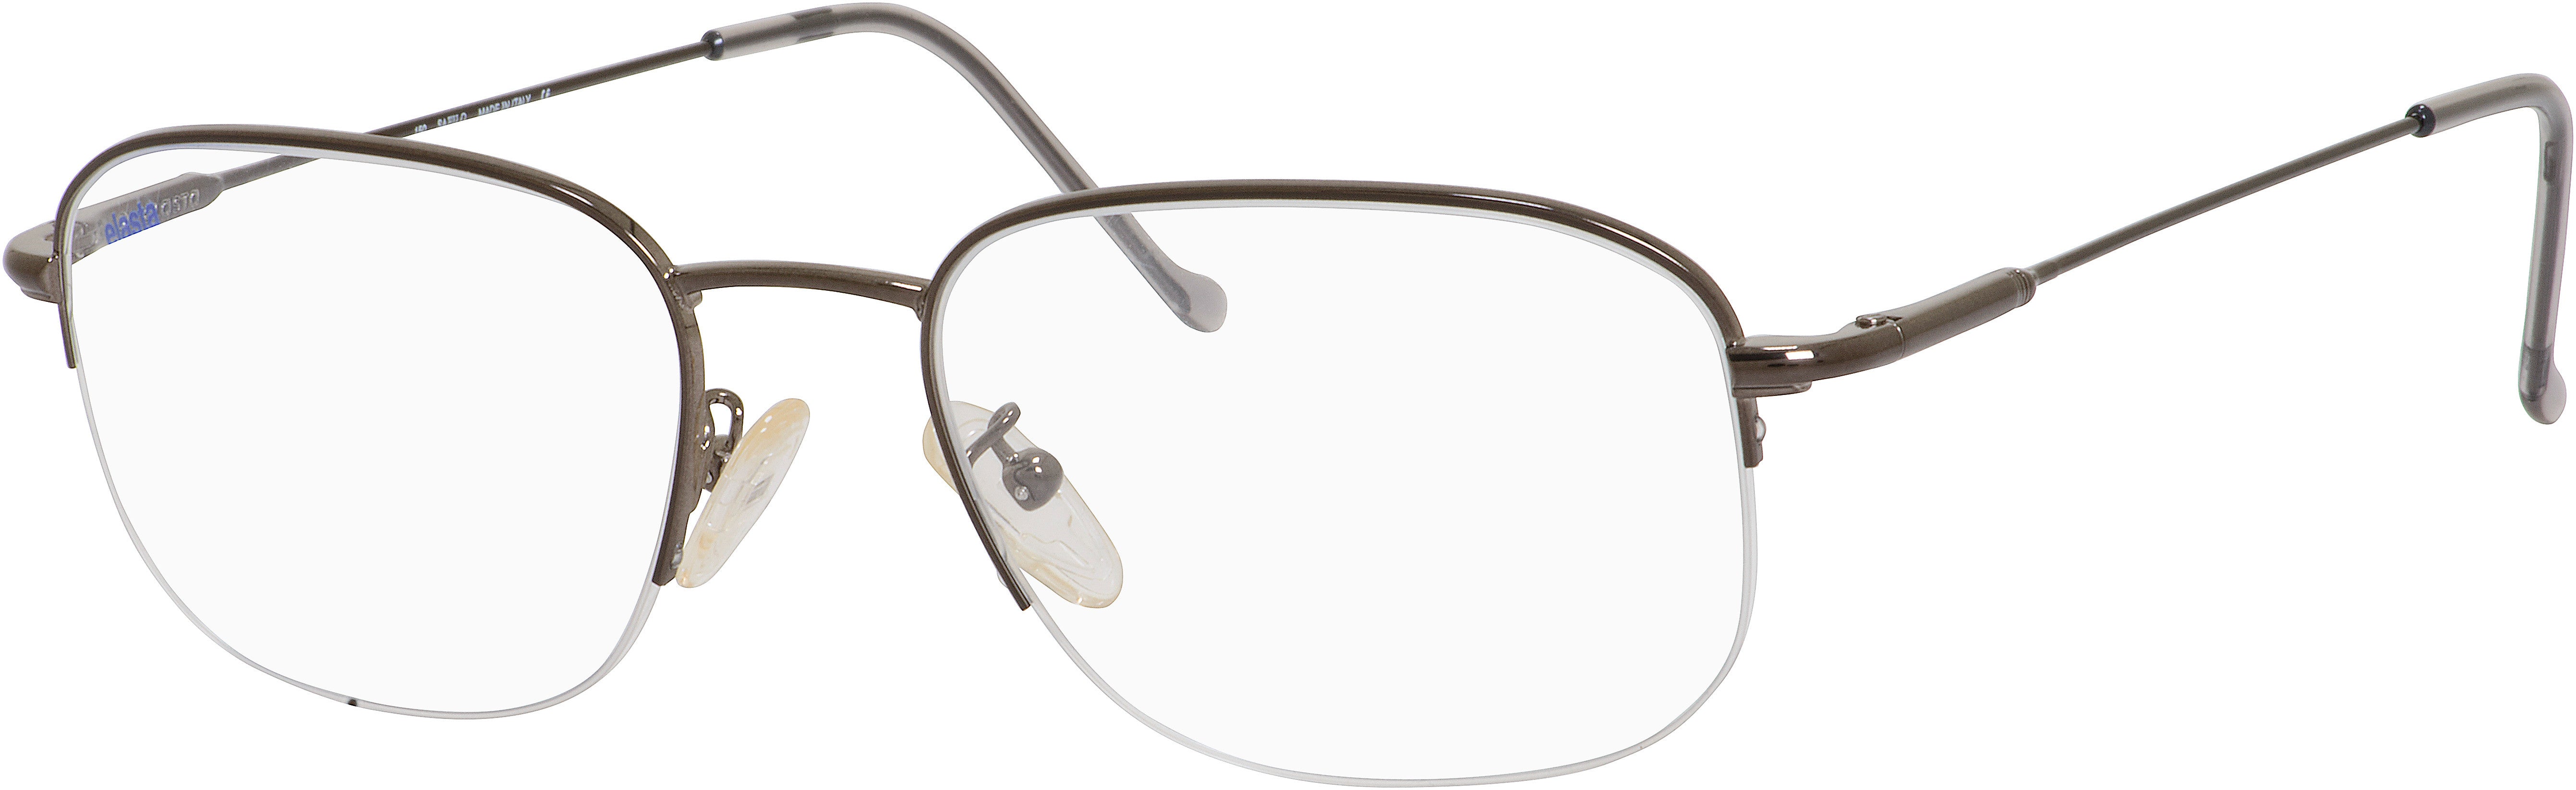  Elasta 7033 Rectangular Eyeglasses 02HH-02HH  Bakelite (00 Demo Lens)